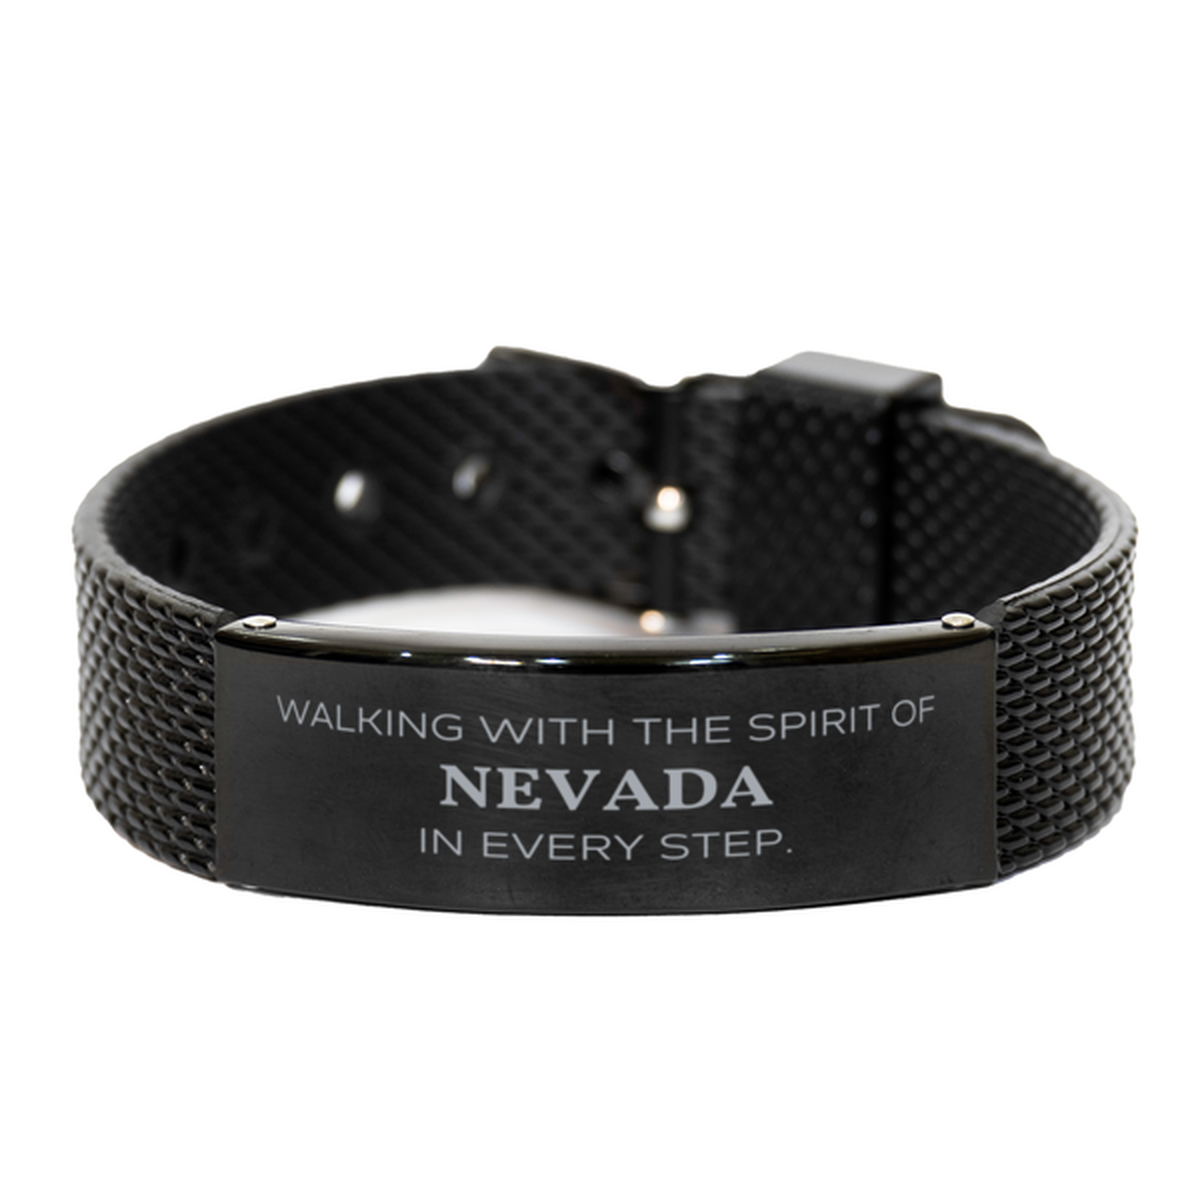 Nevada Gifts, Walking with the spirit, Love Nevada Birthday Christmas Black Shark Mesh Bracelet For Nevada People, Men, Women, Friends